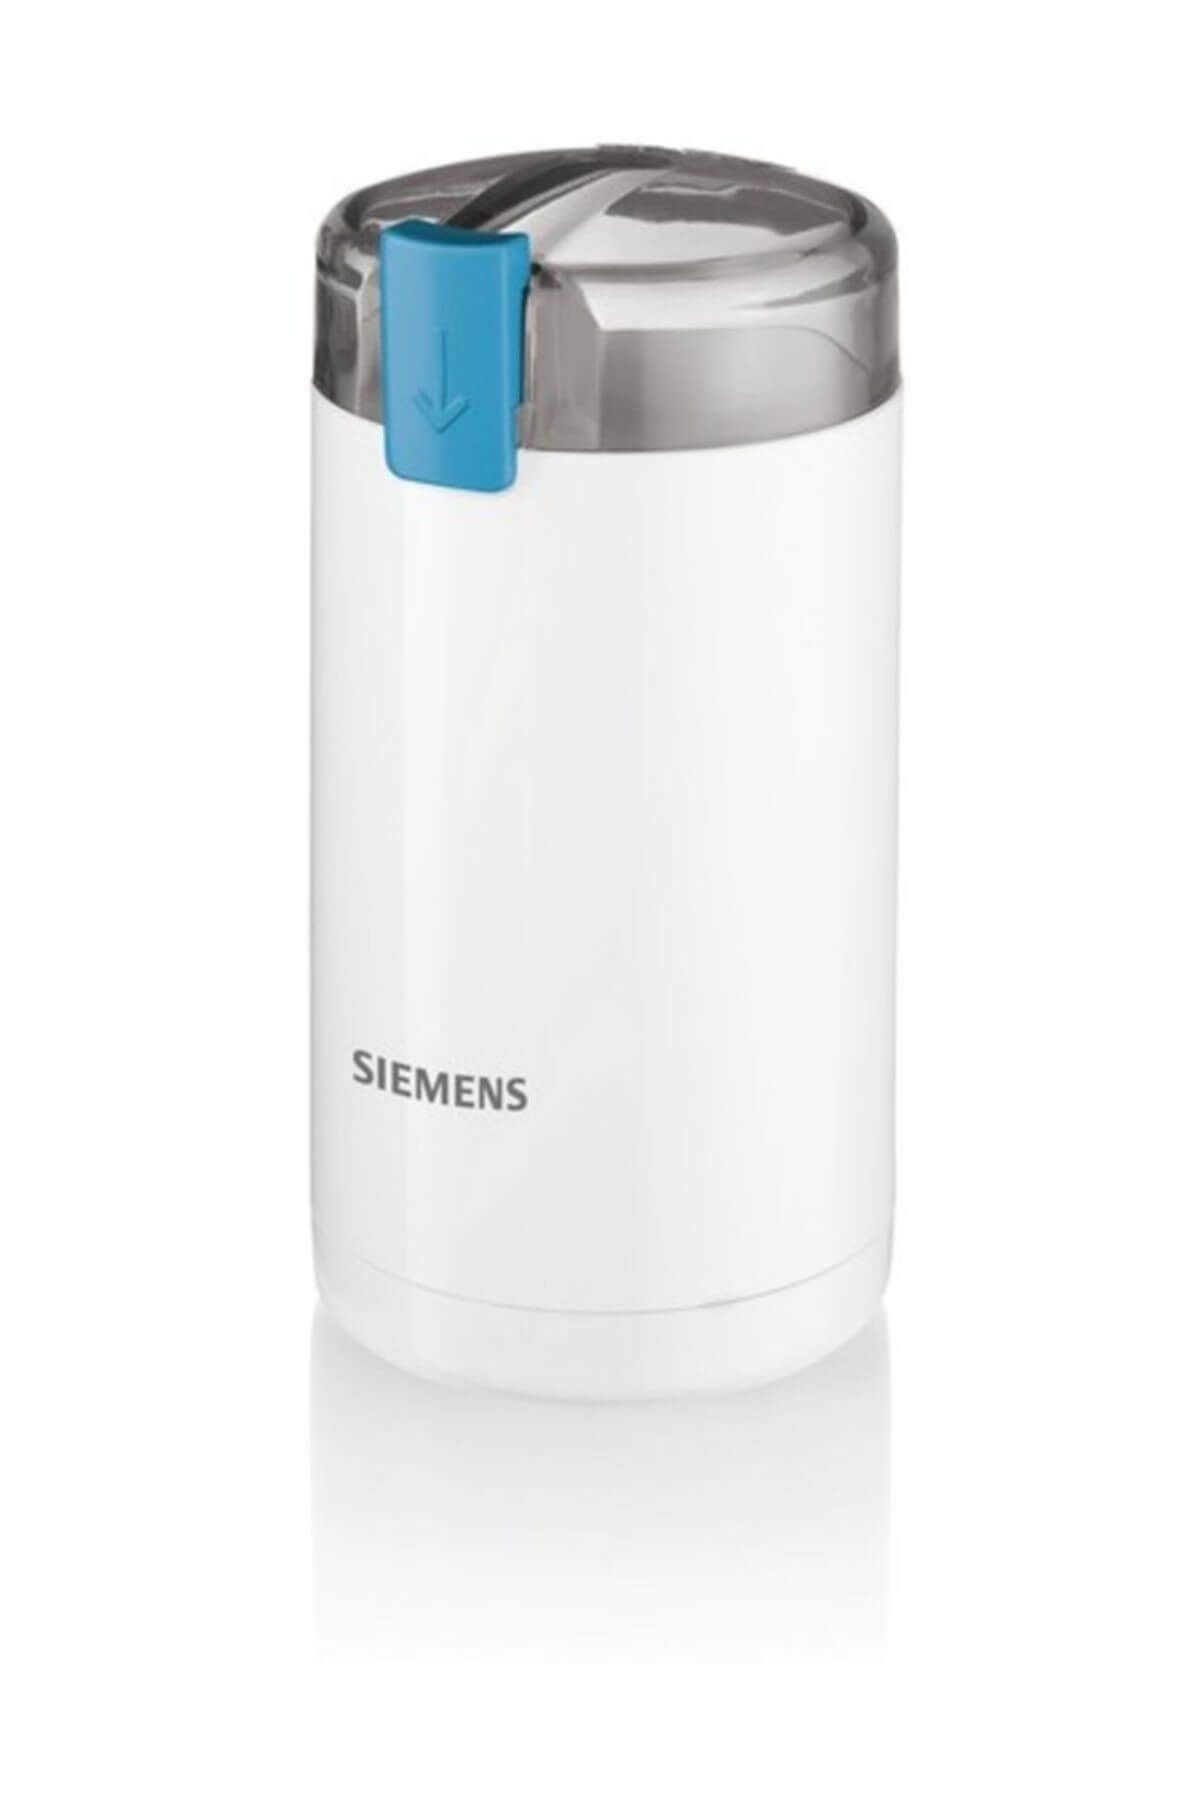 Siemens MC23200 Kahve Öğütücü